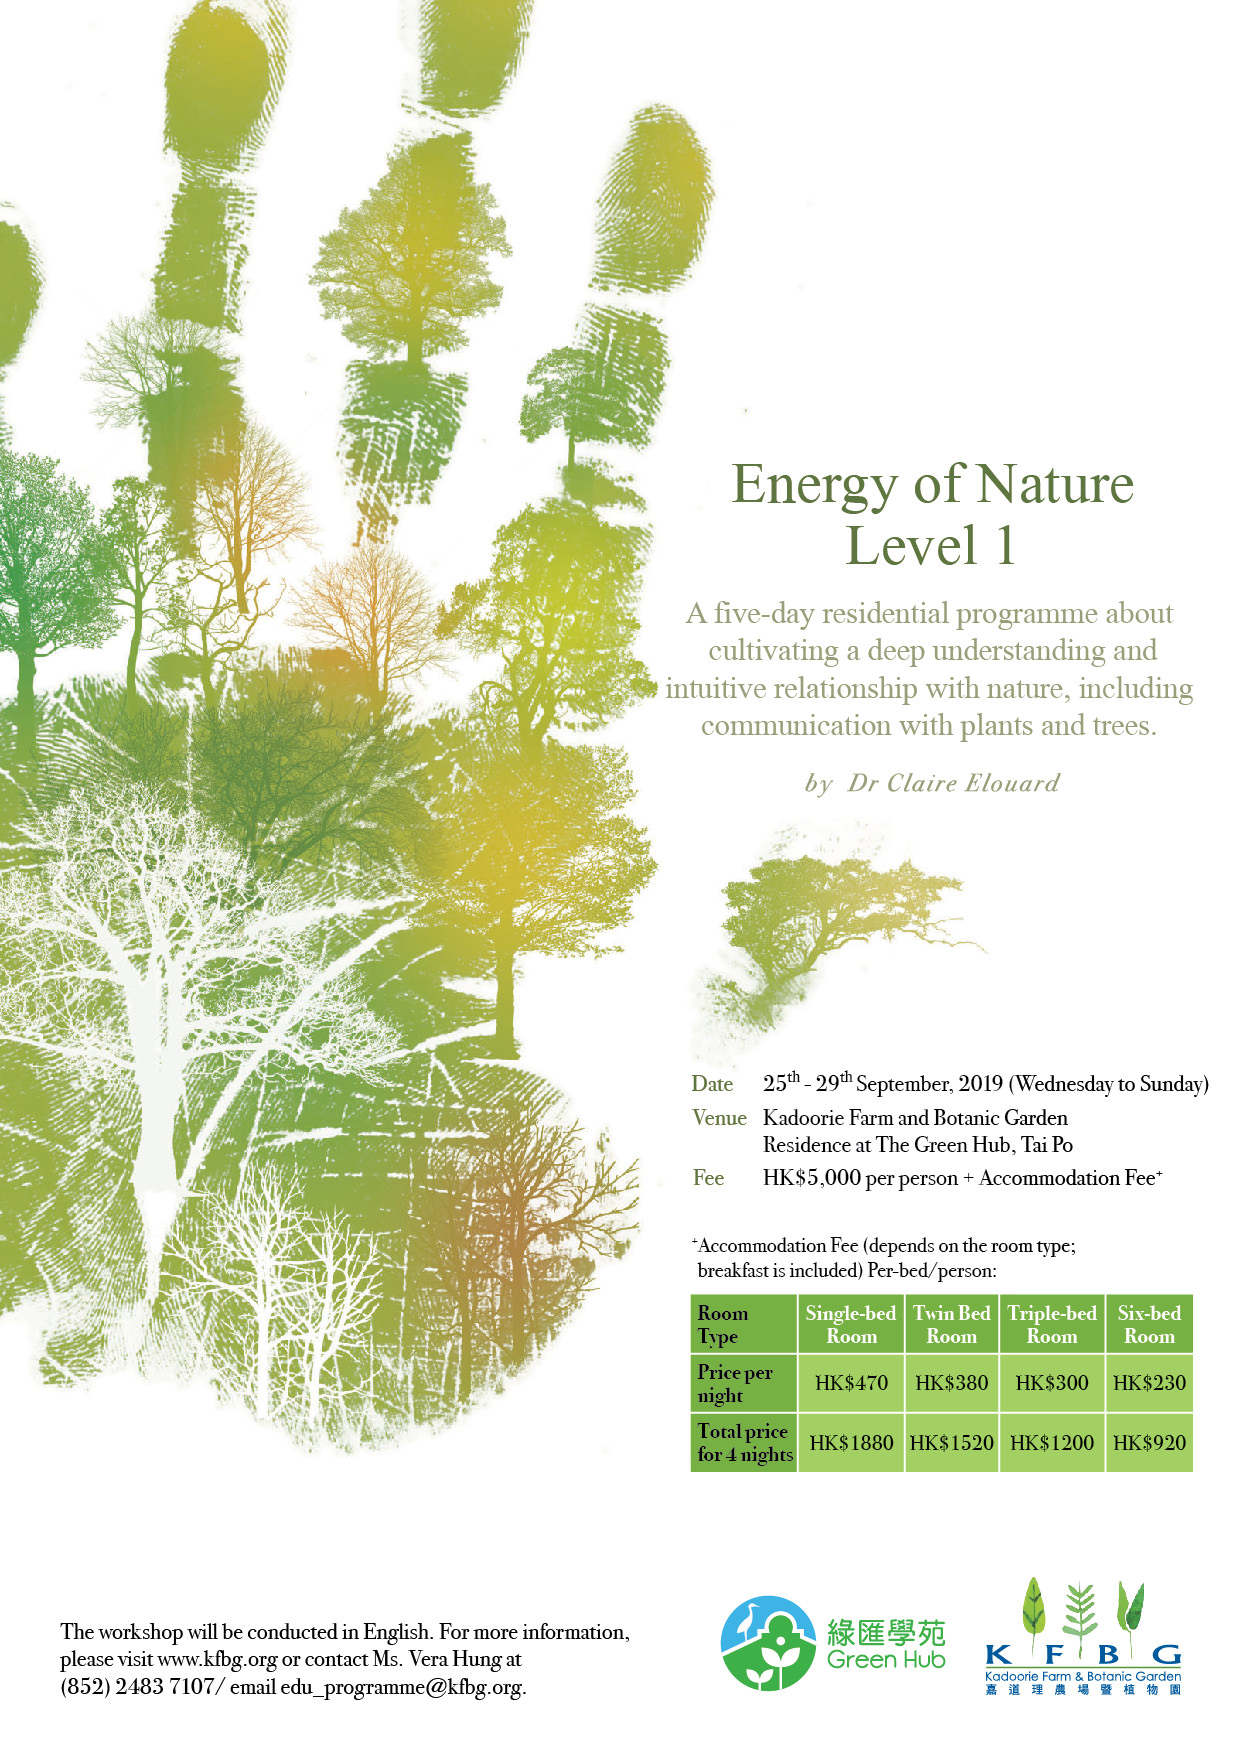 gøre det muligt for Hysterisk bold Energy of Nature - Level I::Kadoorie Farm and Botanic Garden